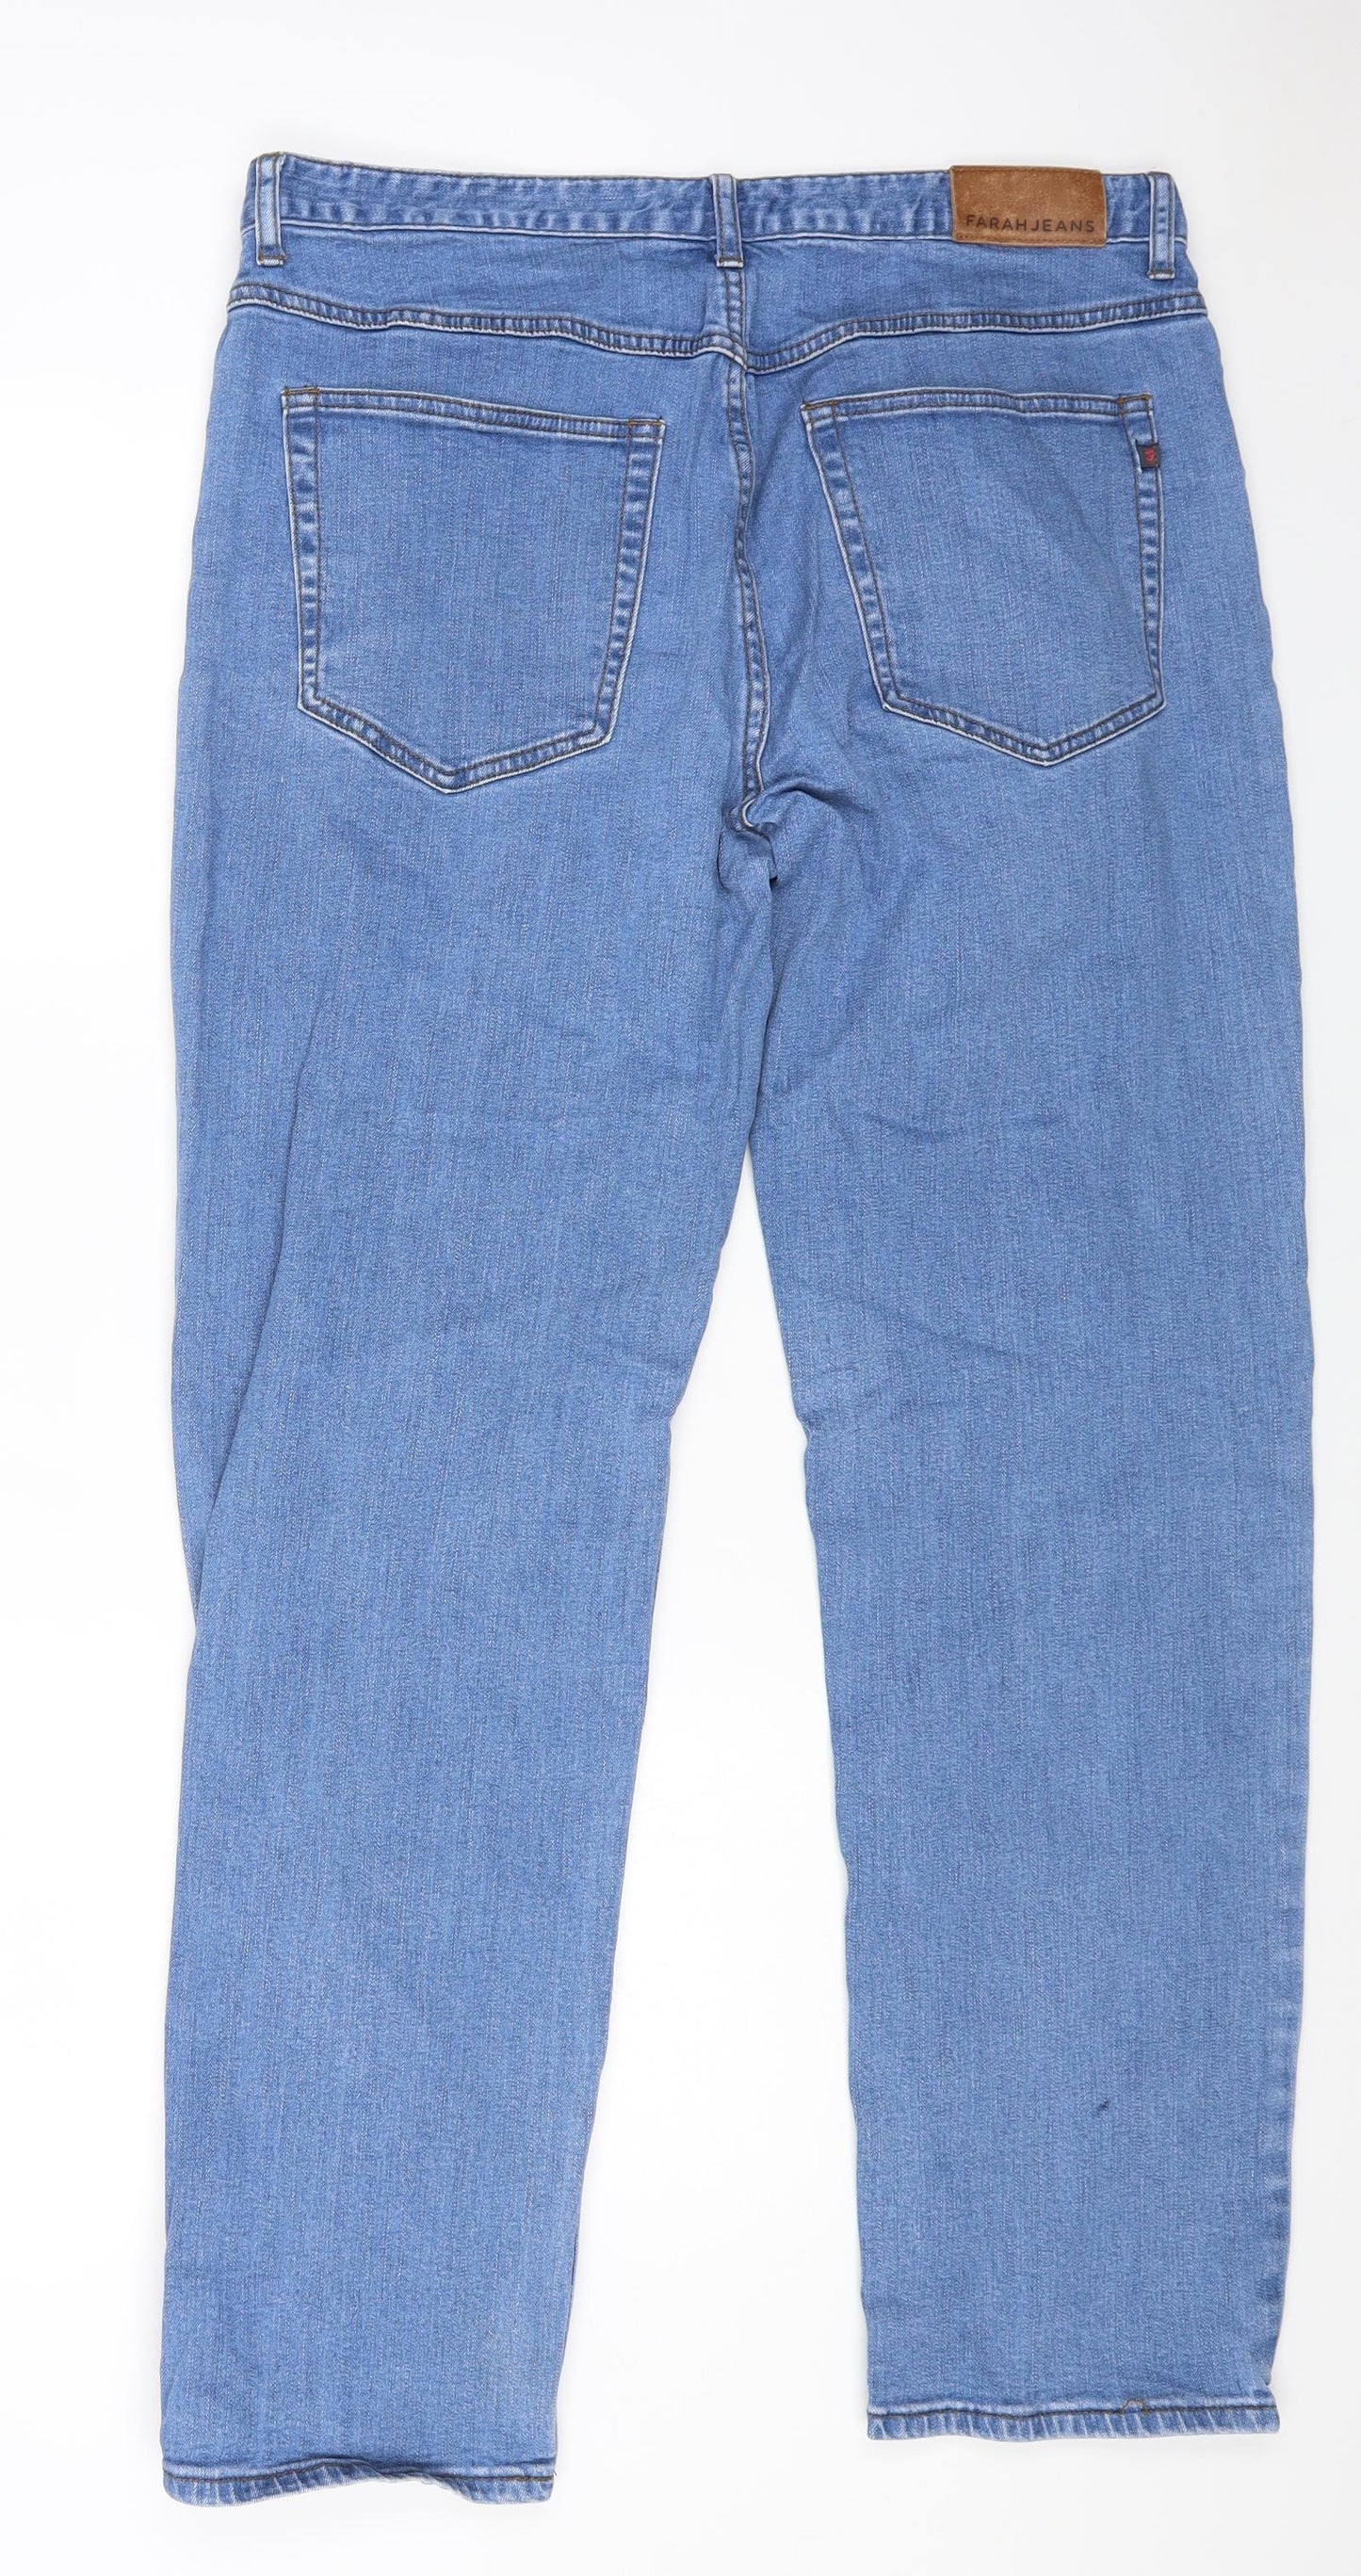 Farah Womens Blue Cotton Straight Jeans Size 38 in L30 in Regular Zip